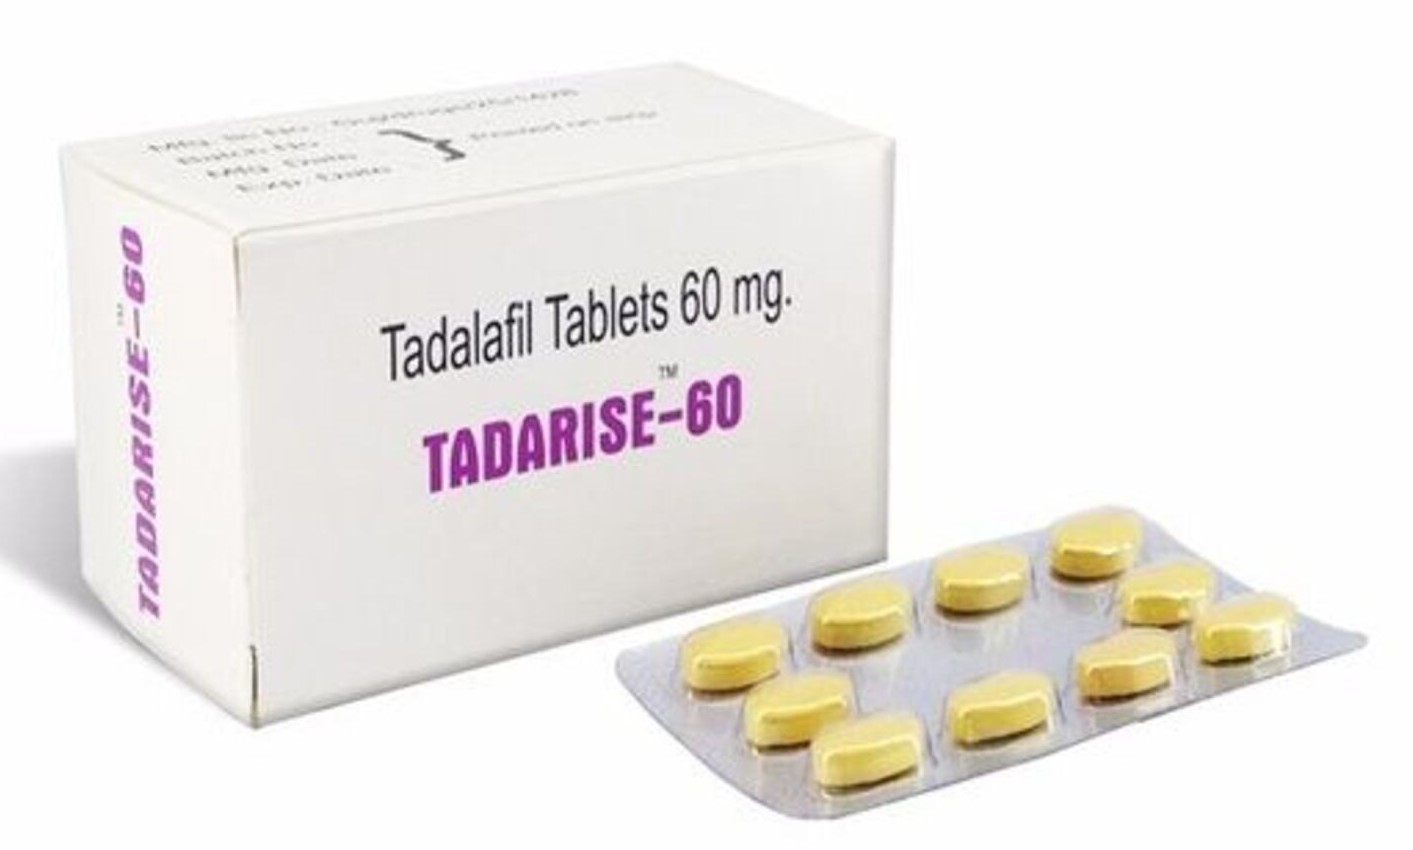 Tadarise 60 mg | Get Oval Shape Yellow pill ( Tadalafil Dosage)